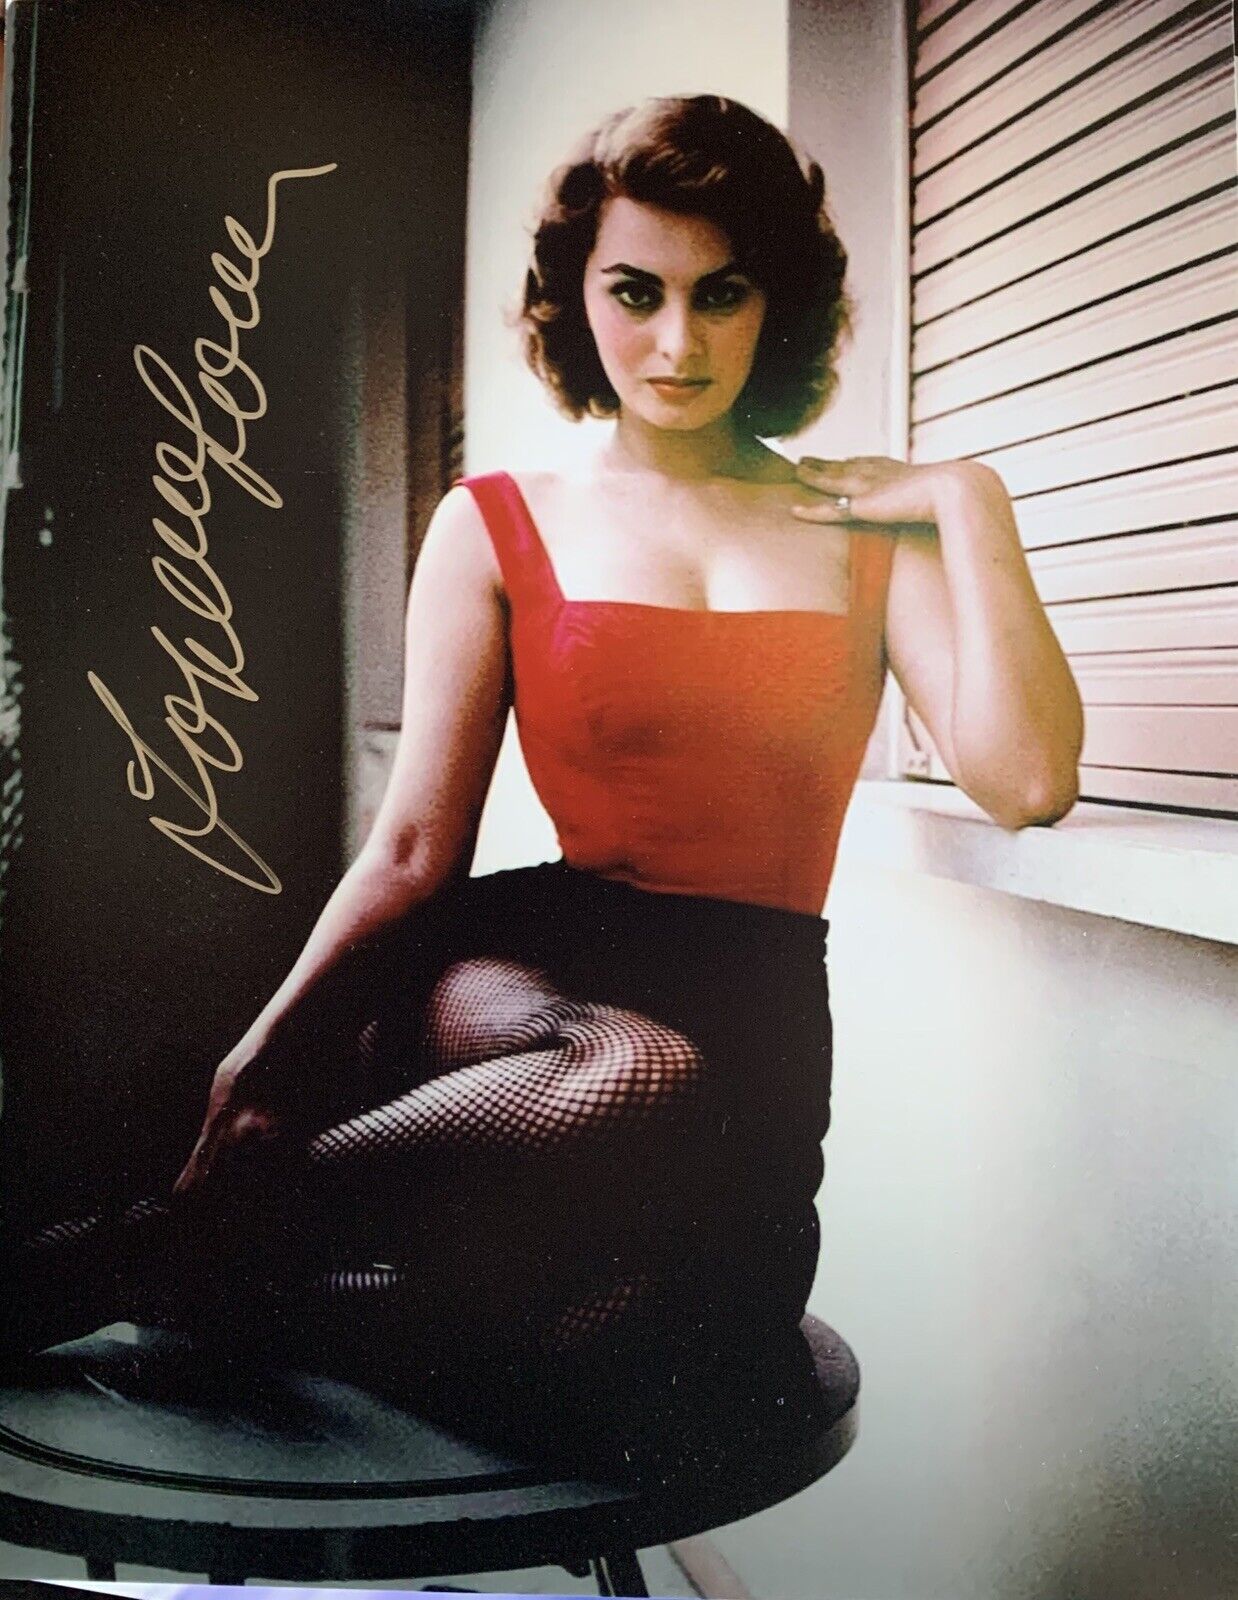 Sophia Loren Signed 8x10 Photo Poster painting Pic Auto